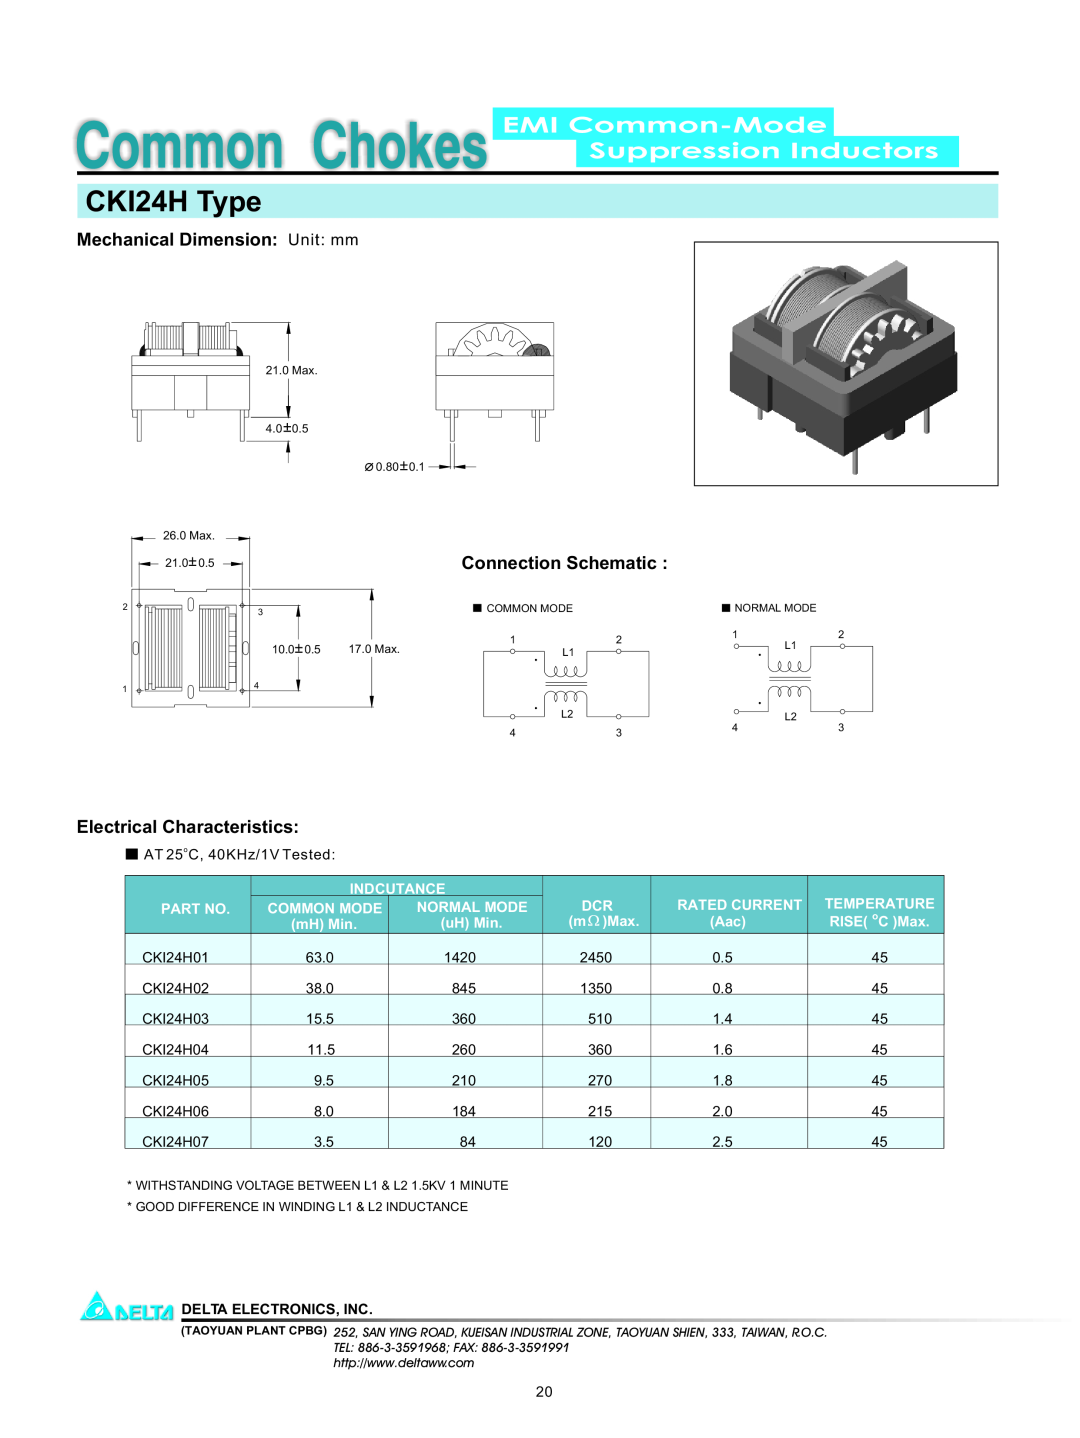 Delta Electronics manual CKI24H Type, EMI Common-Mode Suppression Inductors, Mechanical Dimension Unit mm, Indcutance 